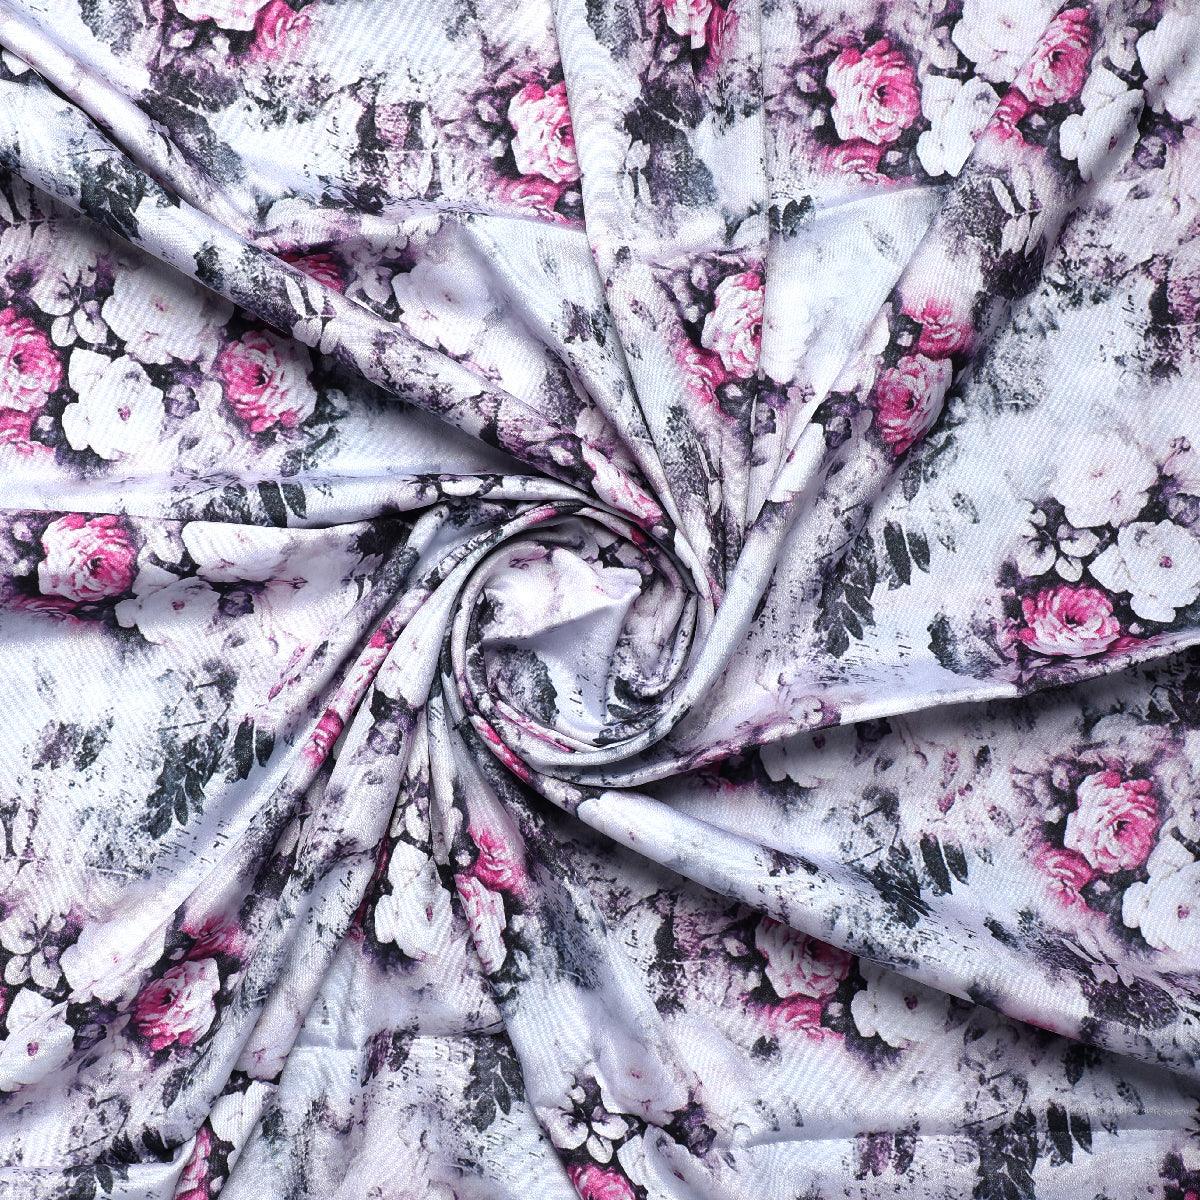 Vintage Floral Art Collection Digital Printed Fabric - Silk Crepe - FAB VOGUE Studio®